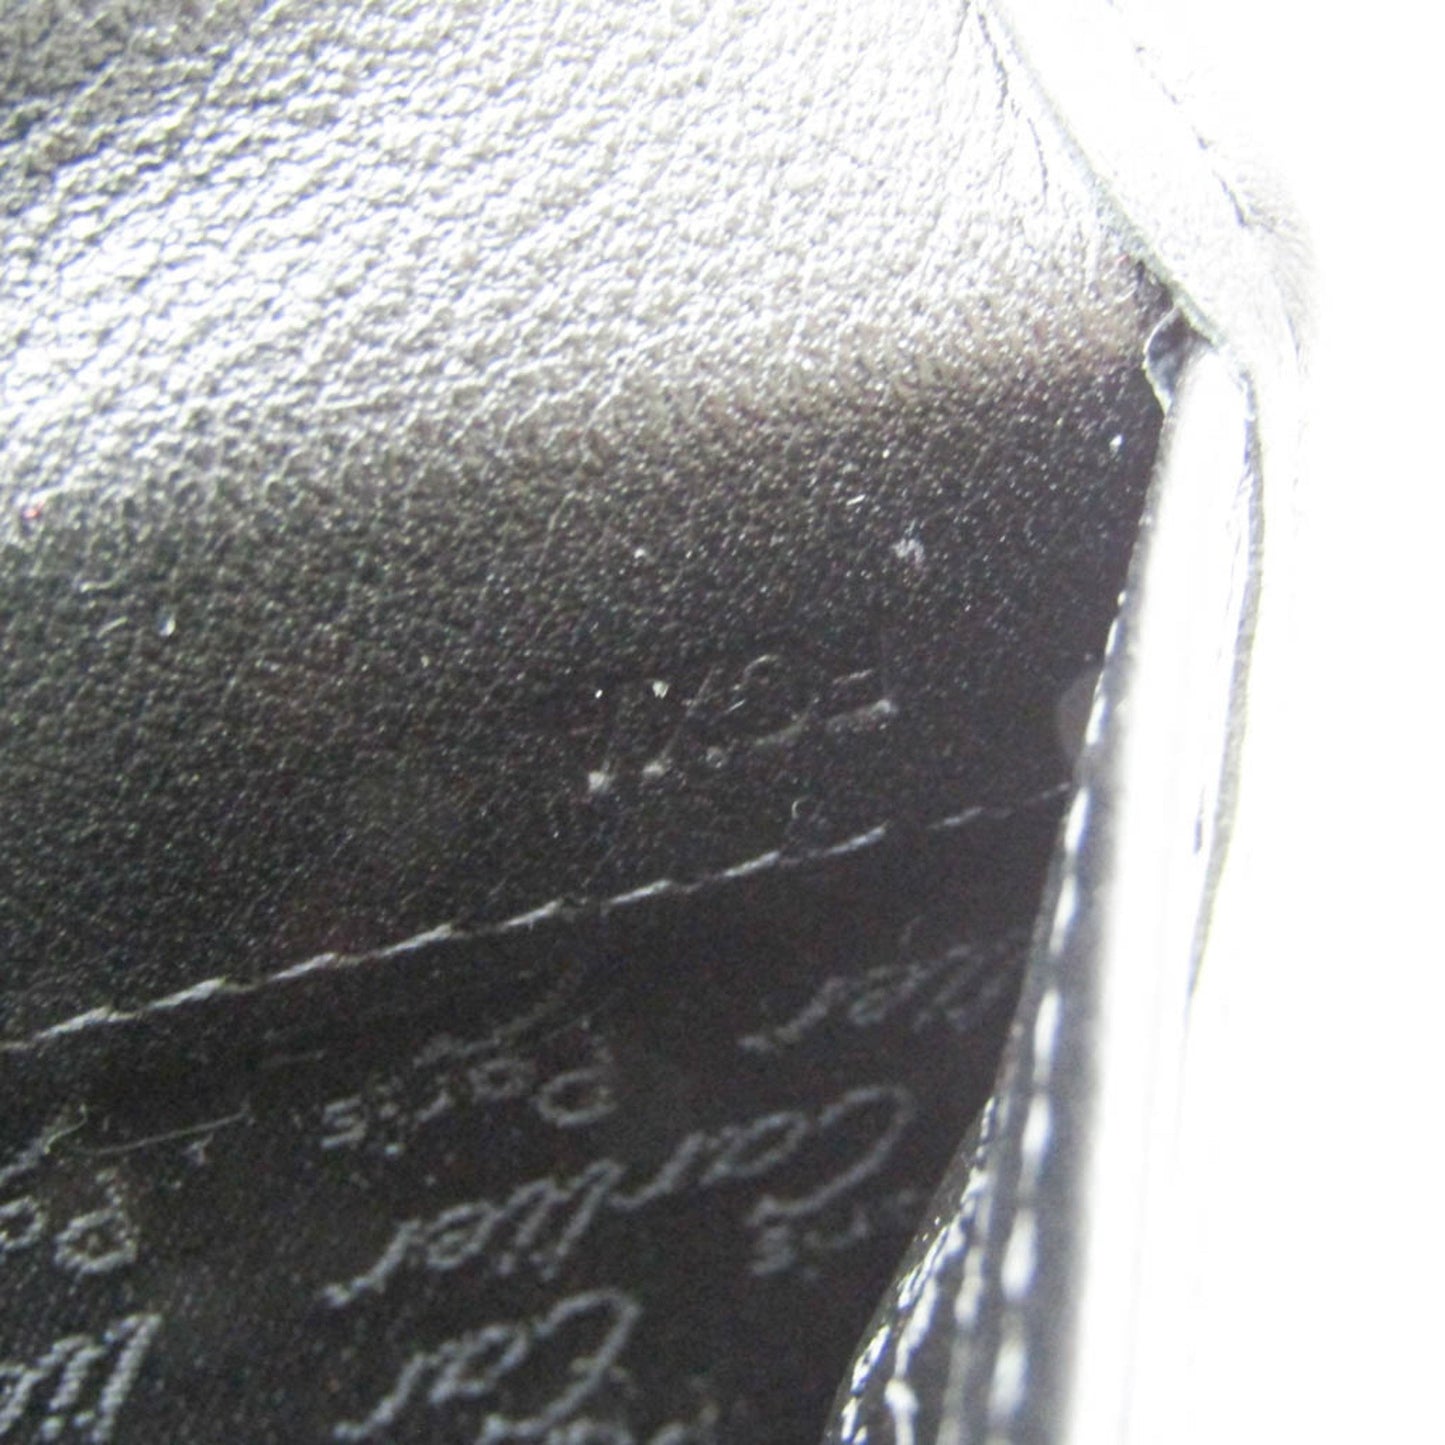 Cartier Unisex Luxurious Black Leather Bi-Fold Long Wallet by Cartier Pasha in Black